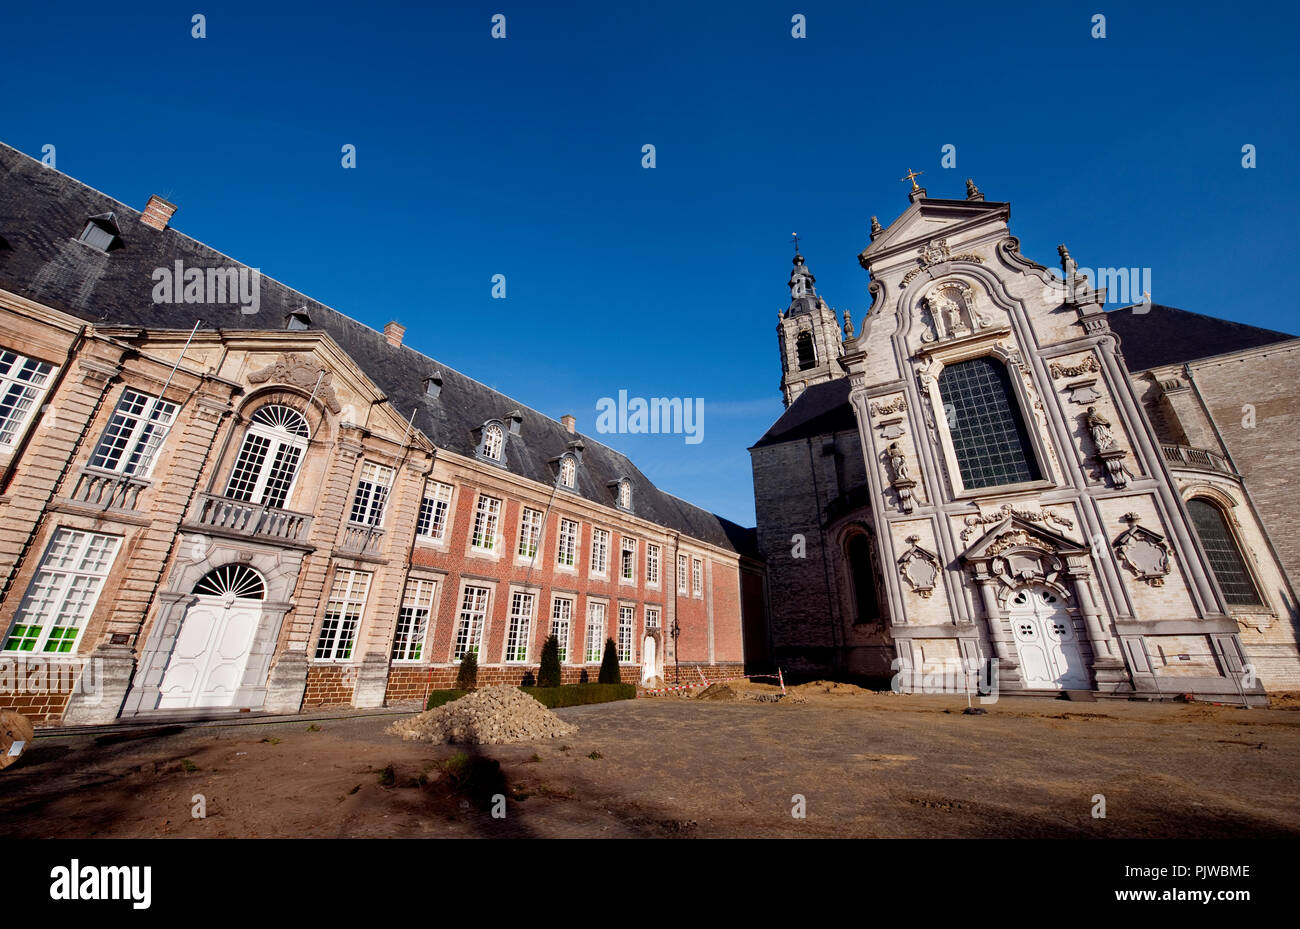 The 17th century baroque church of the premonstratensian monastery Averbody abbey (Belgium, 16/11/2011) Stock Photo